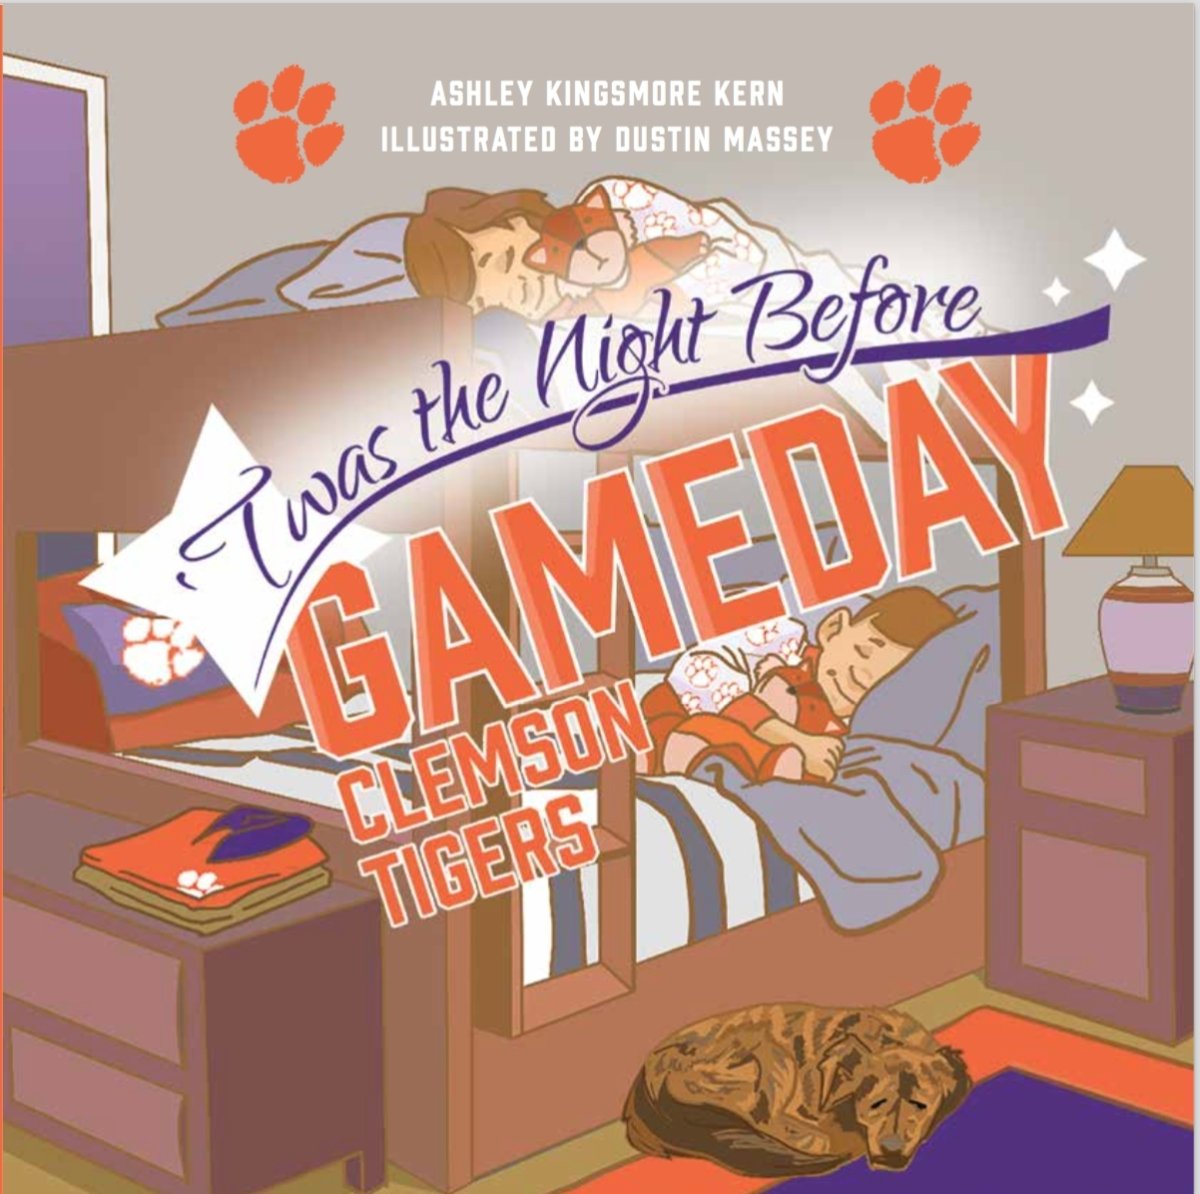 Twas the Night Before Storybook - Clemson Tigers - Mr. Knickerbocker